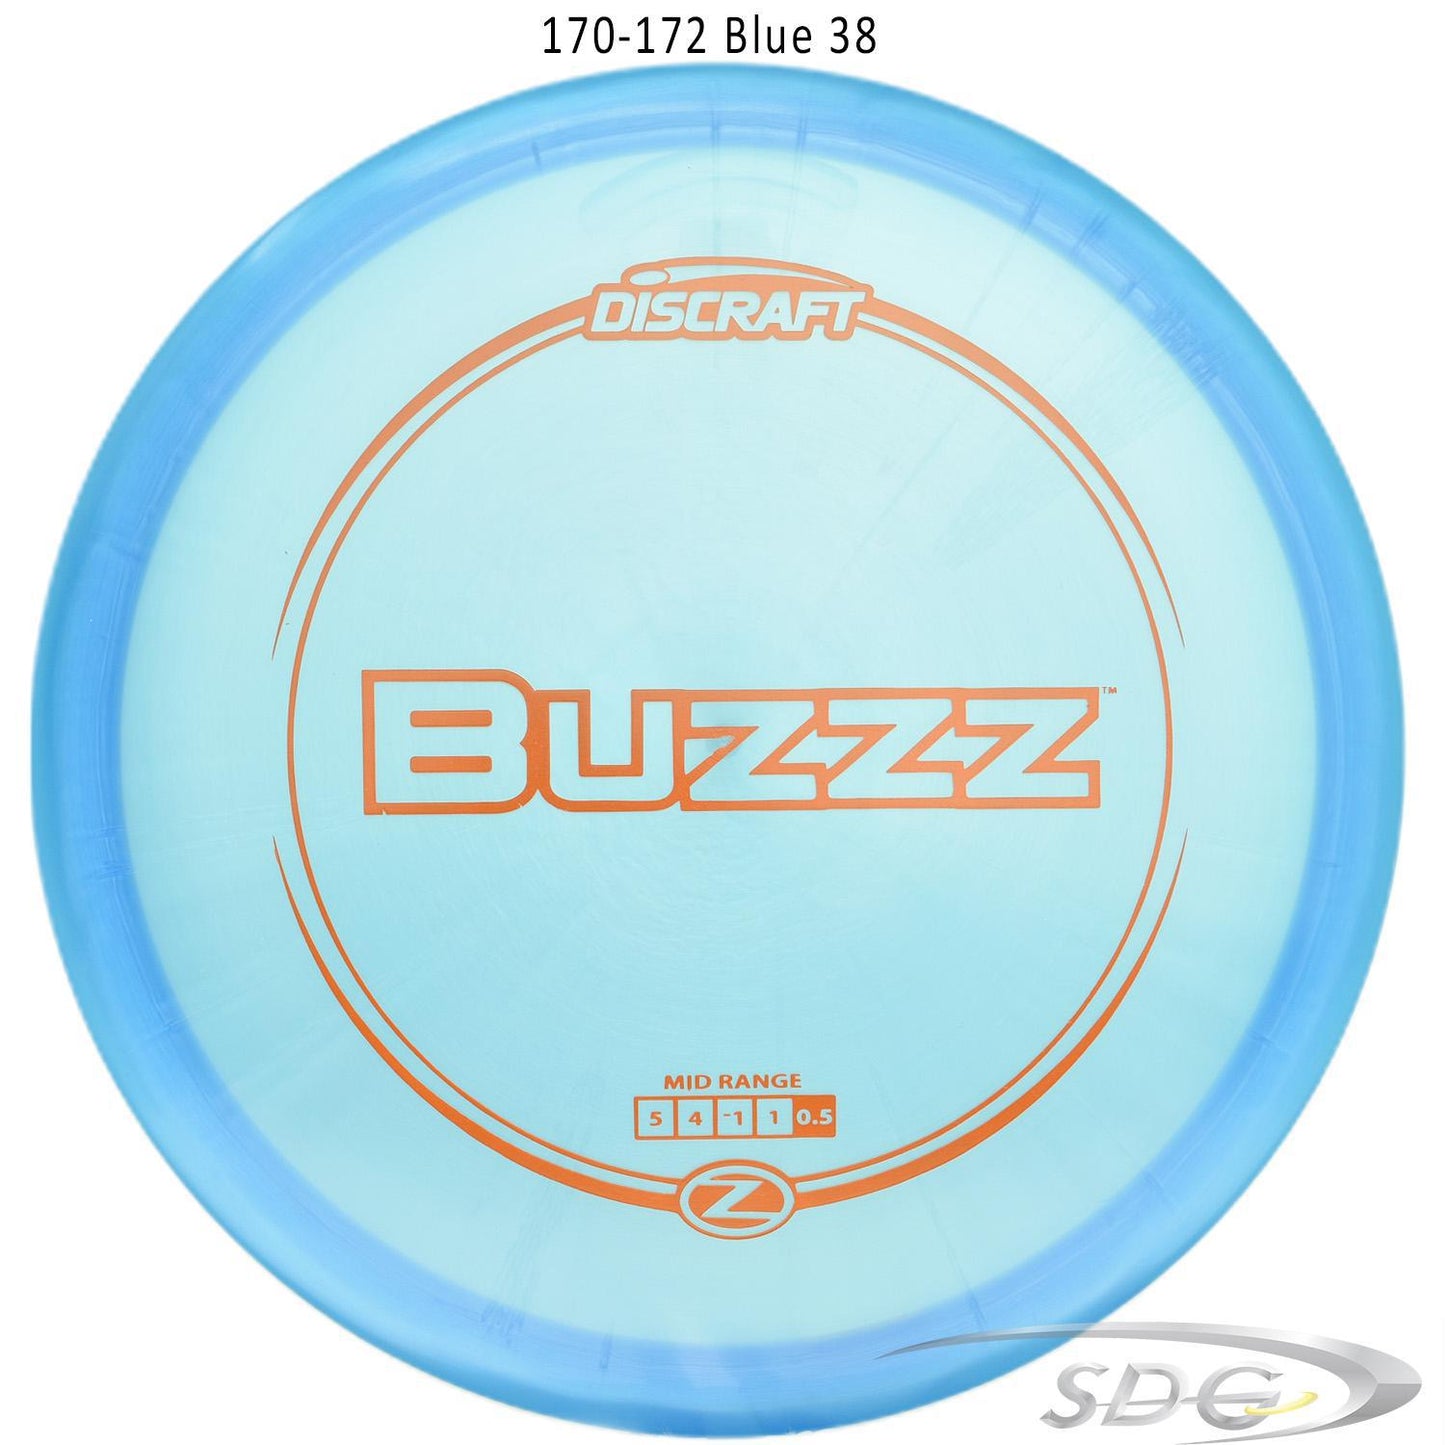 discraft-z-line-buzzz-disc-golf-mid-range-172-170-weights 170-172 Blue 38 